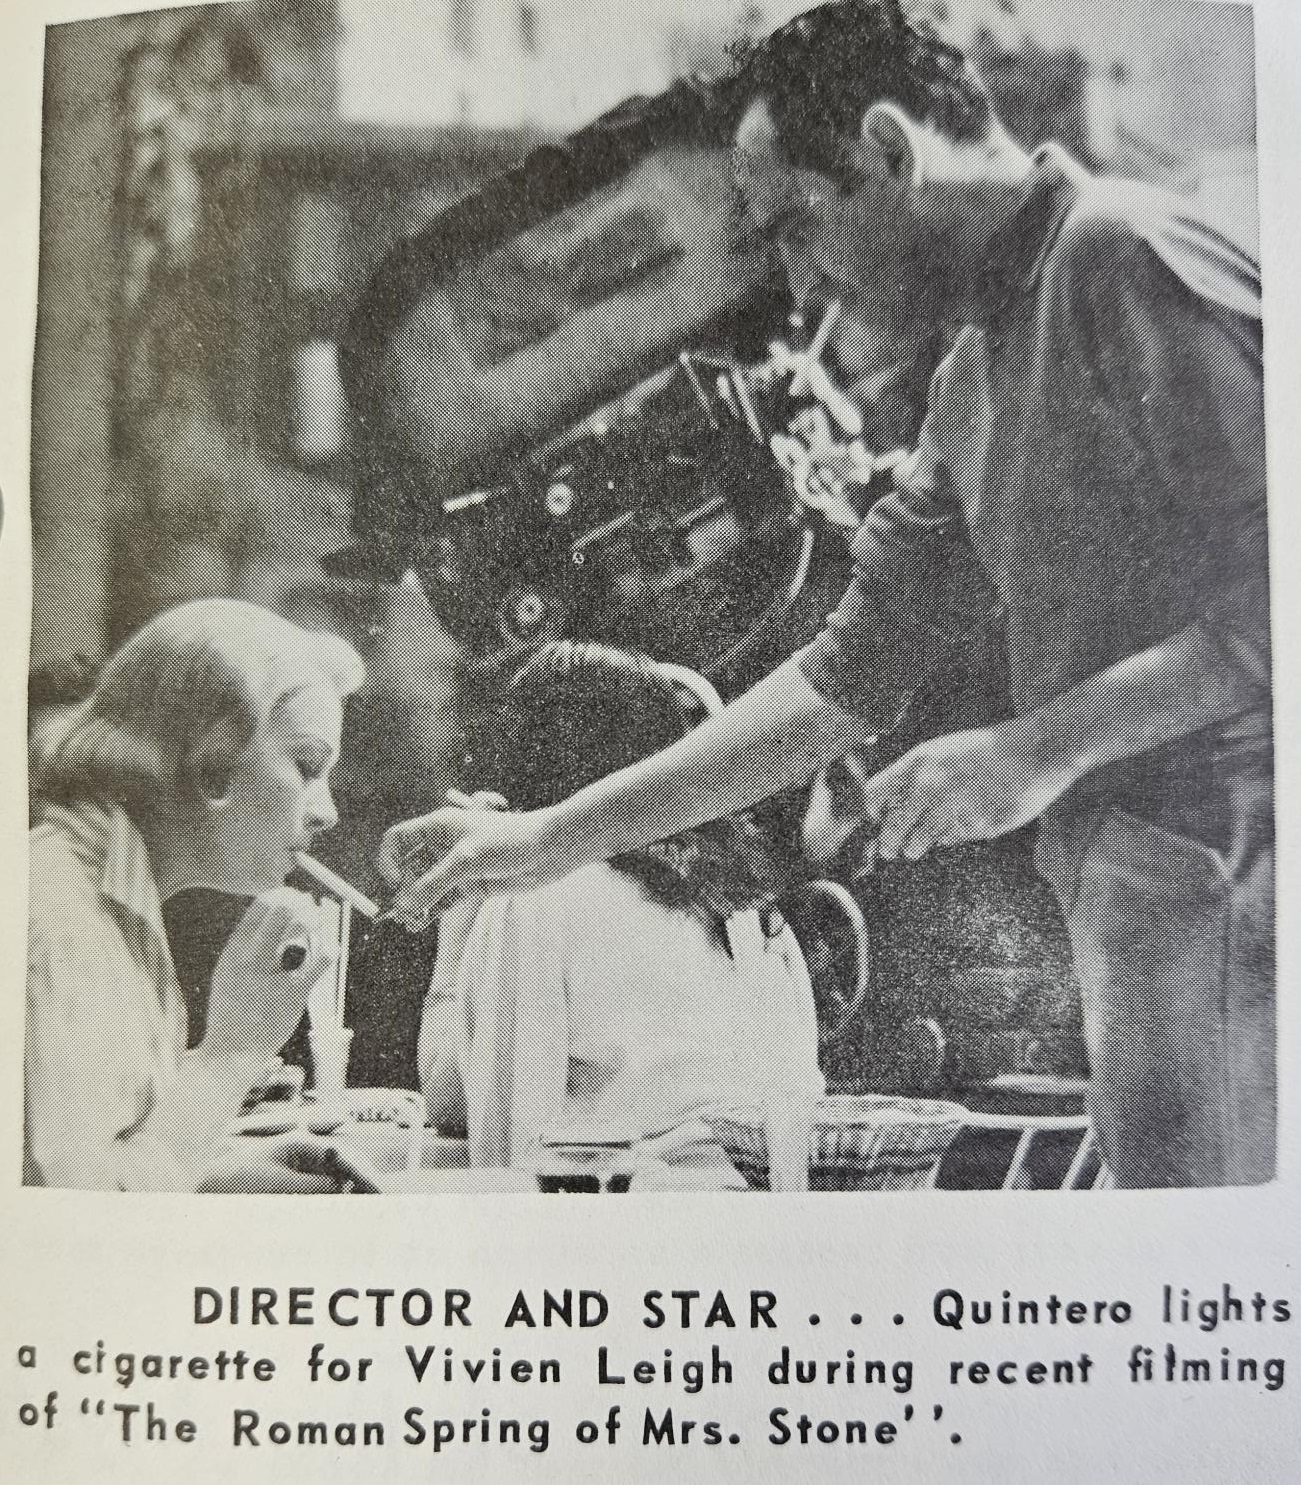 Photo of Jose Quintero lighting a cigarette for Vivien Leigh